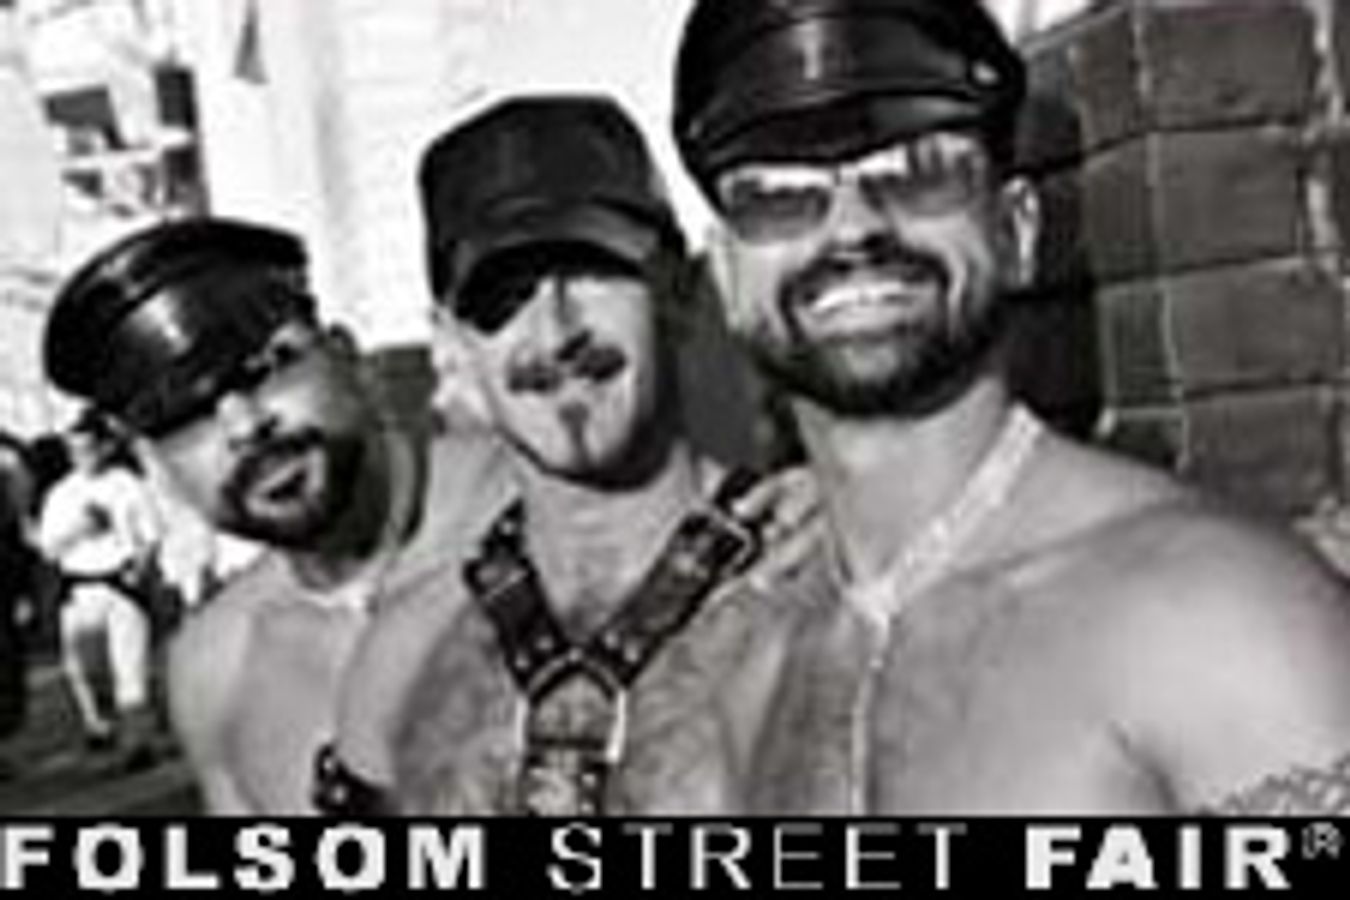 Folsom Street Events